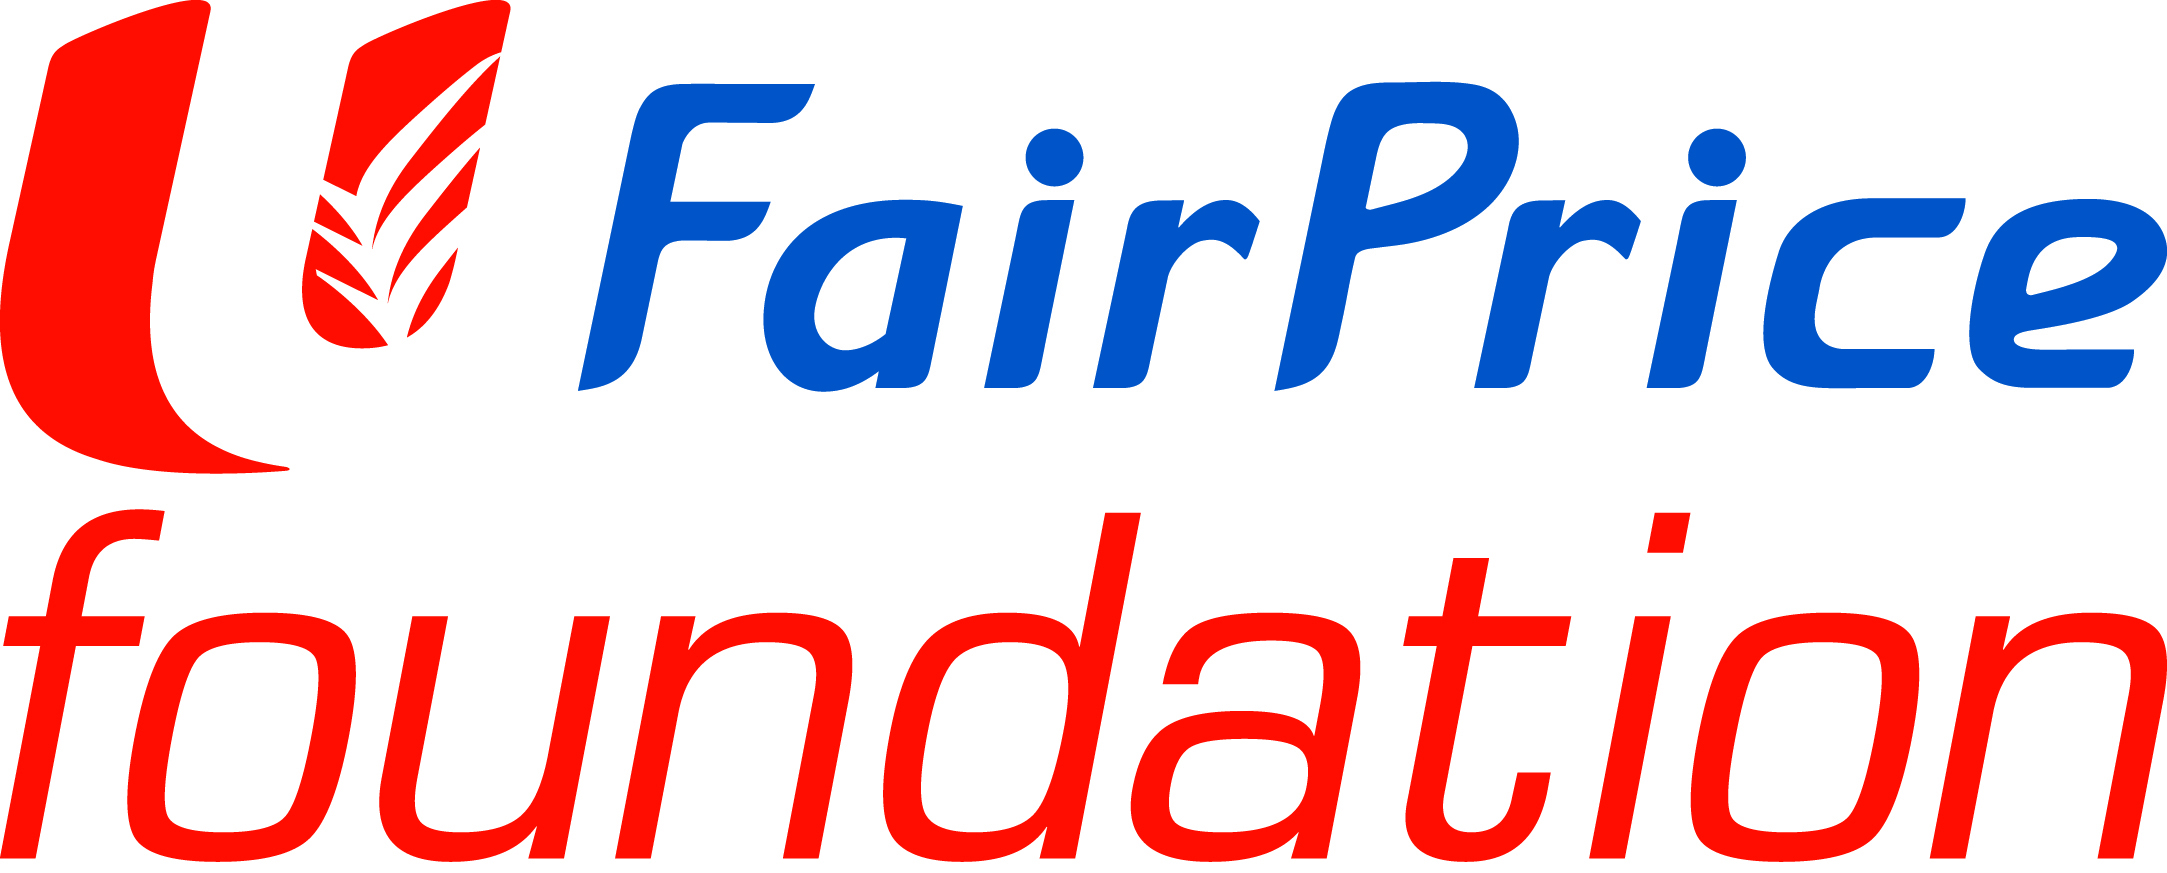 FP-OOS13004_FP Foundation Logo.jpg